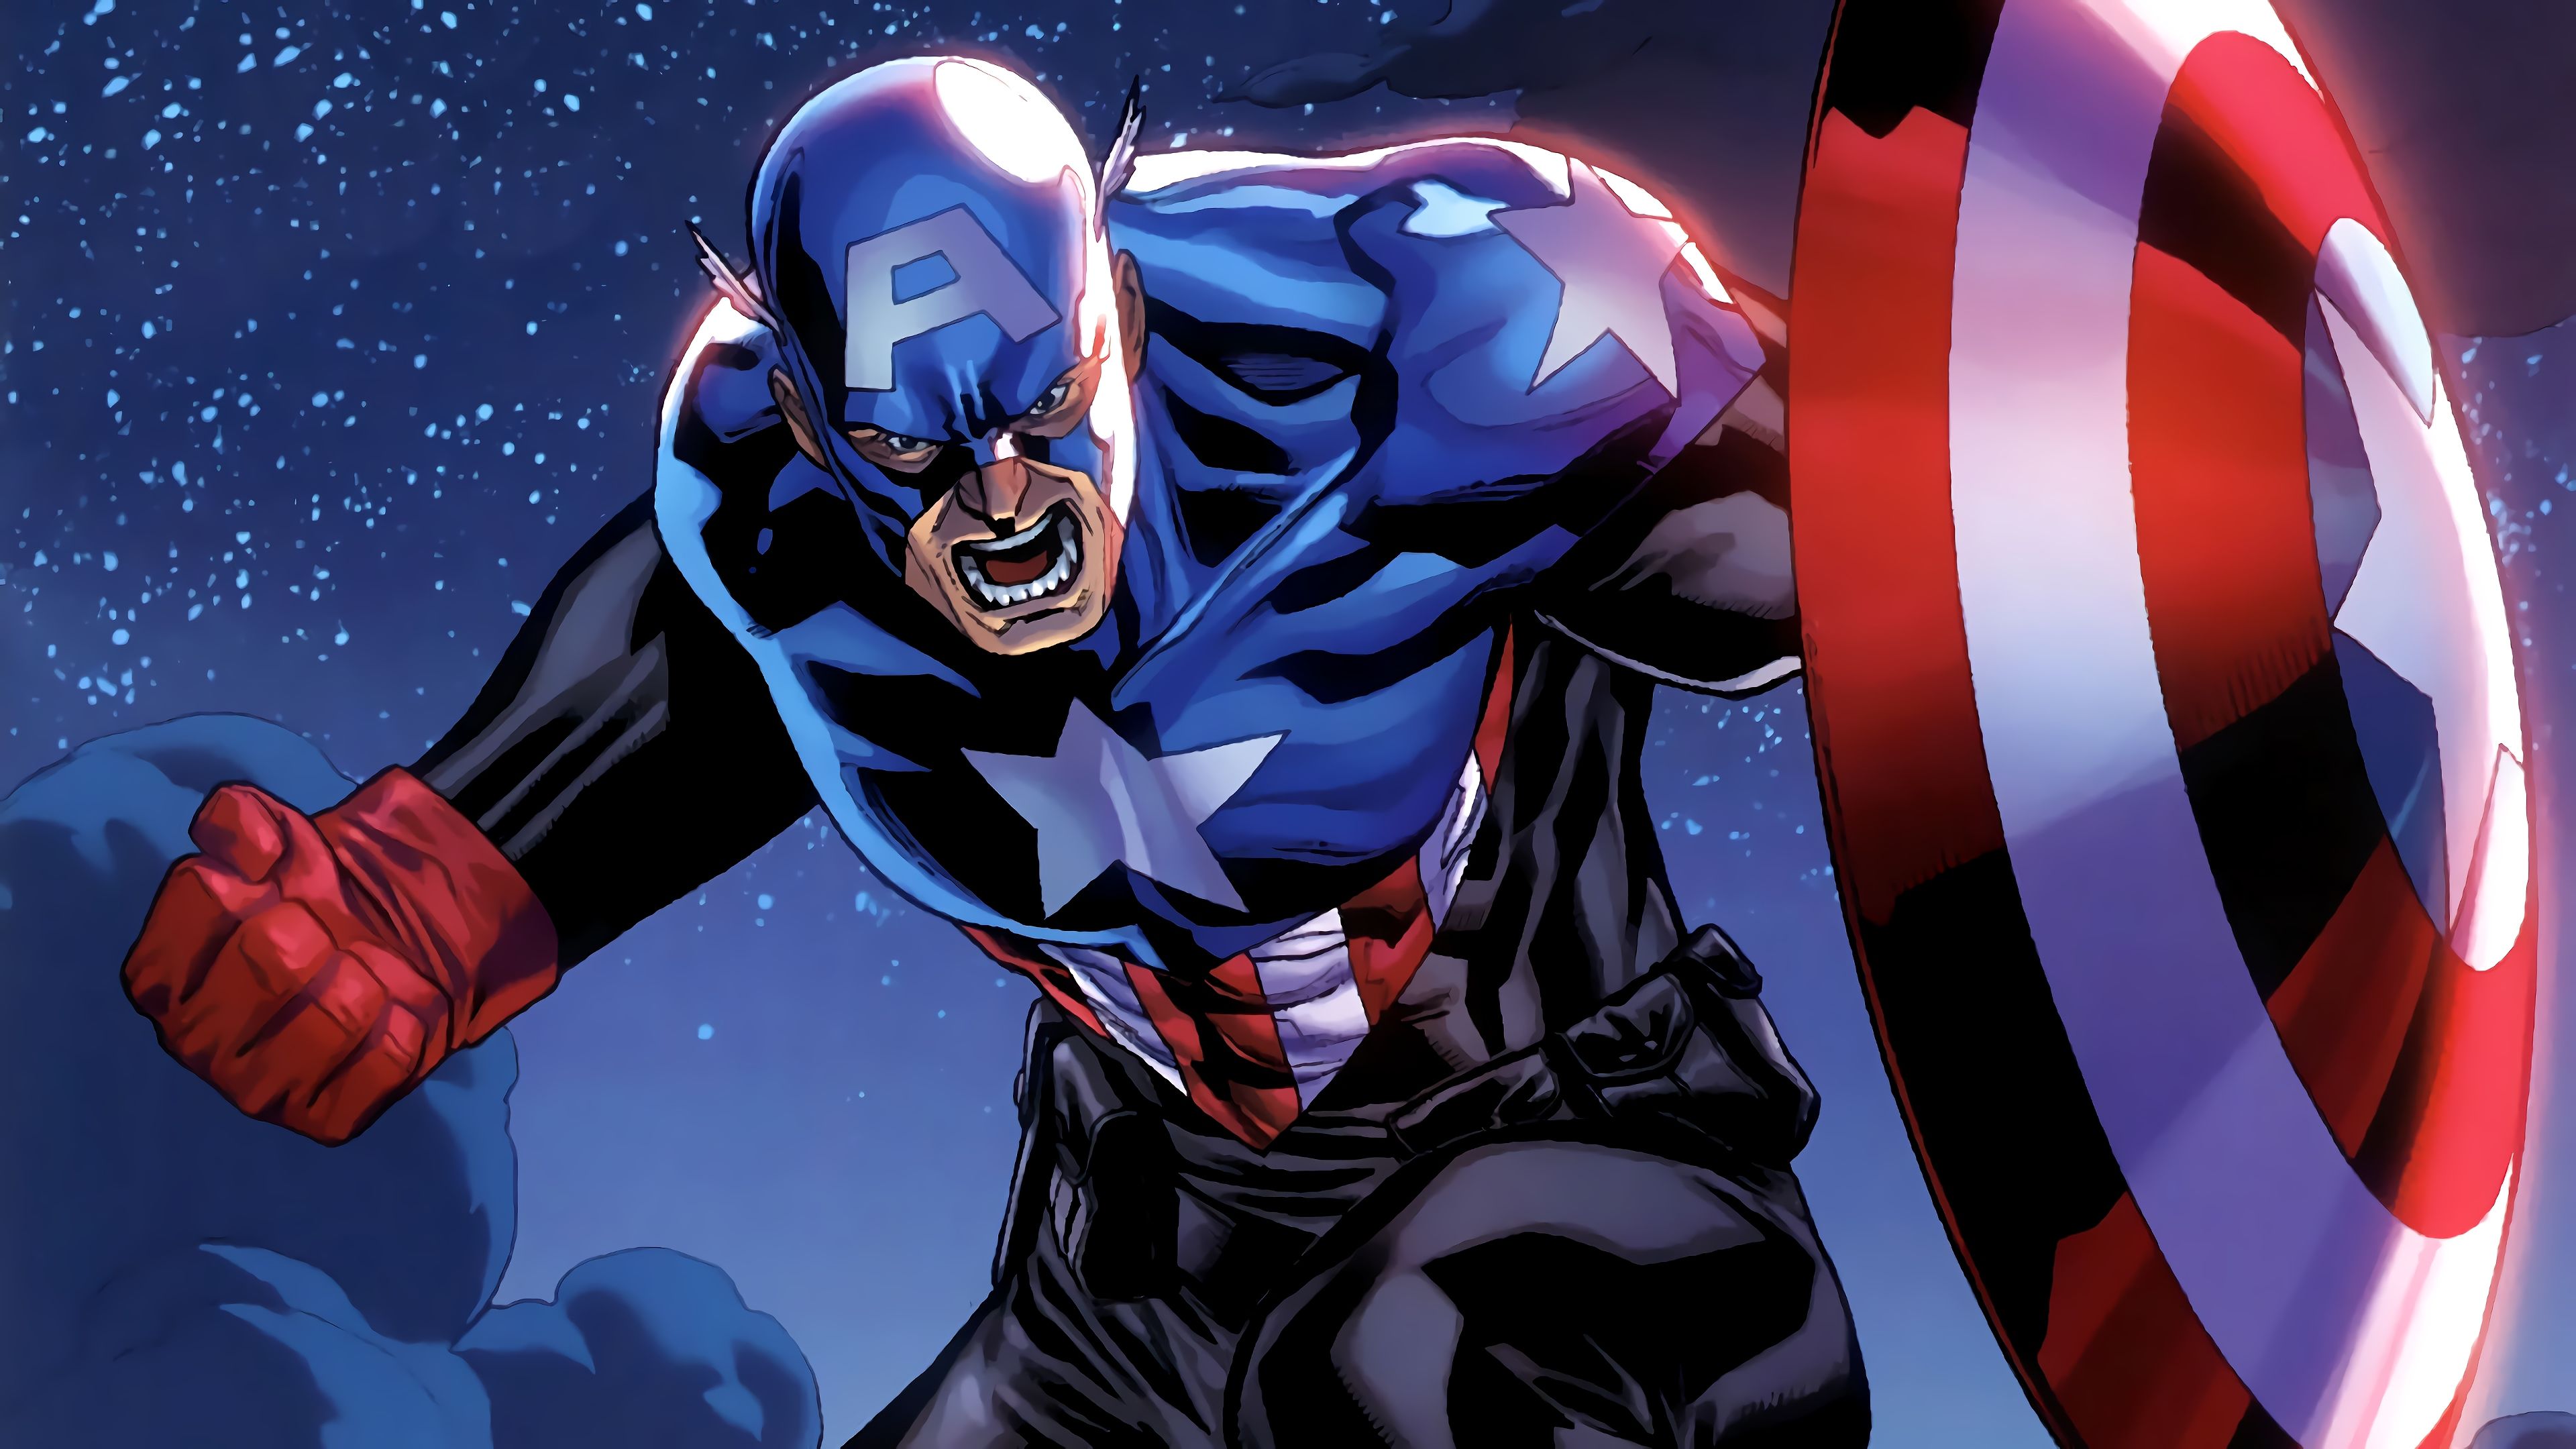 Captain America Marvel Comics 4K Wallpaper Marvel Comics, Comics, captain america. Captain america comic, Marvel captain america, Captain america